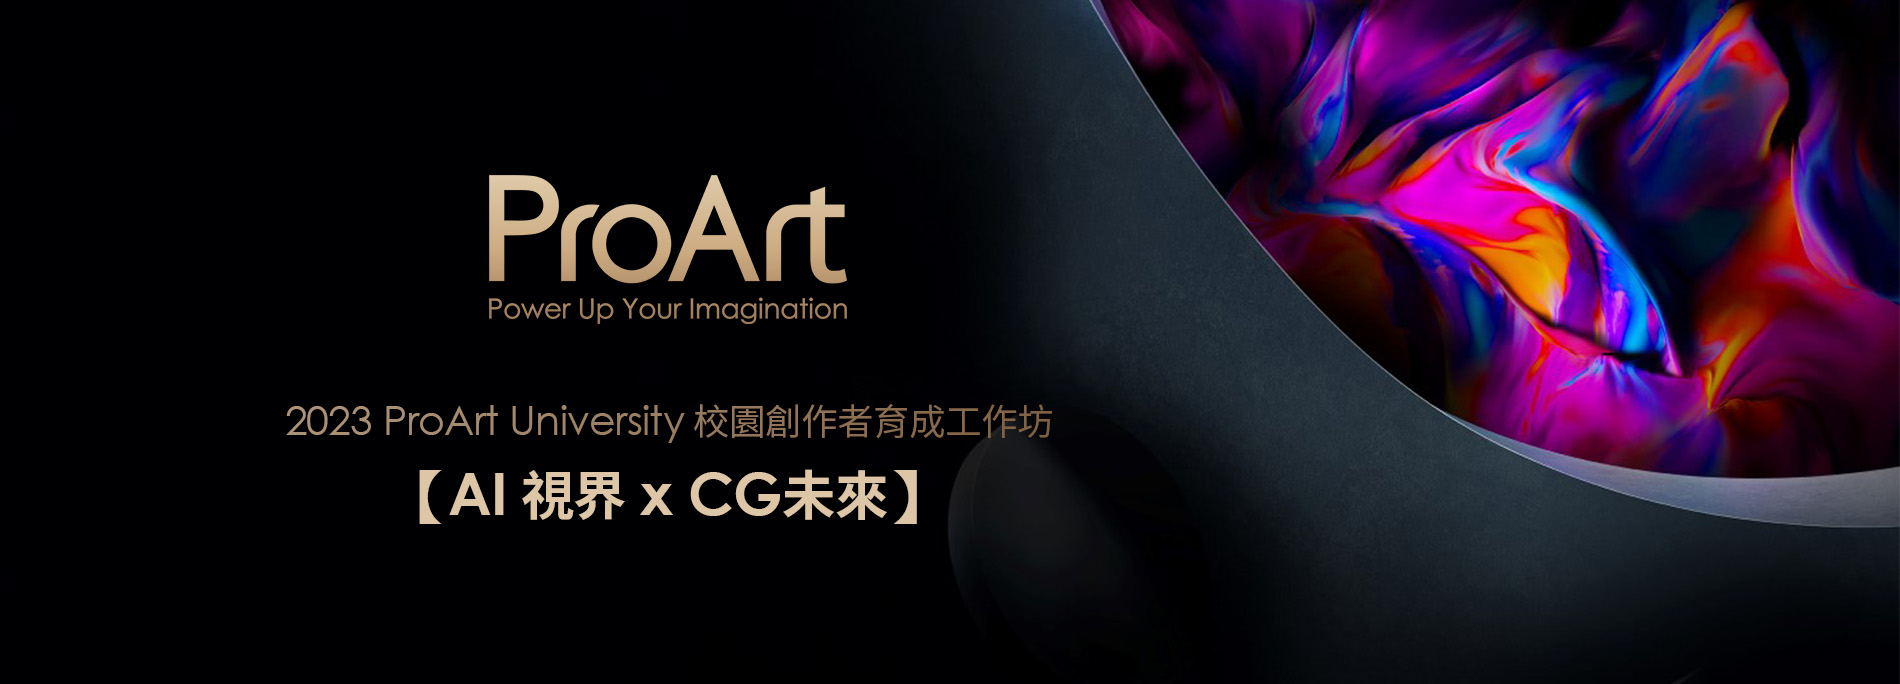 2023 ProArt University 校園創作者育成工作坊-【AI 視界 x CG未來】